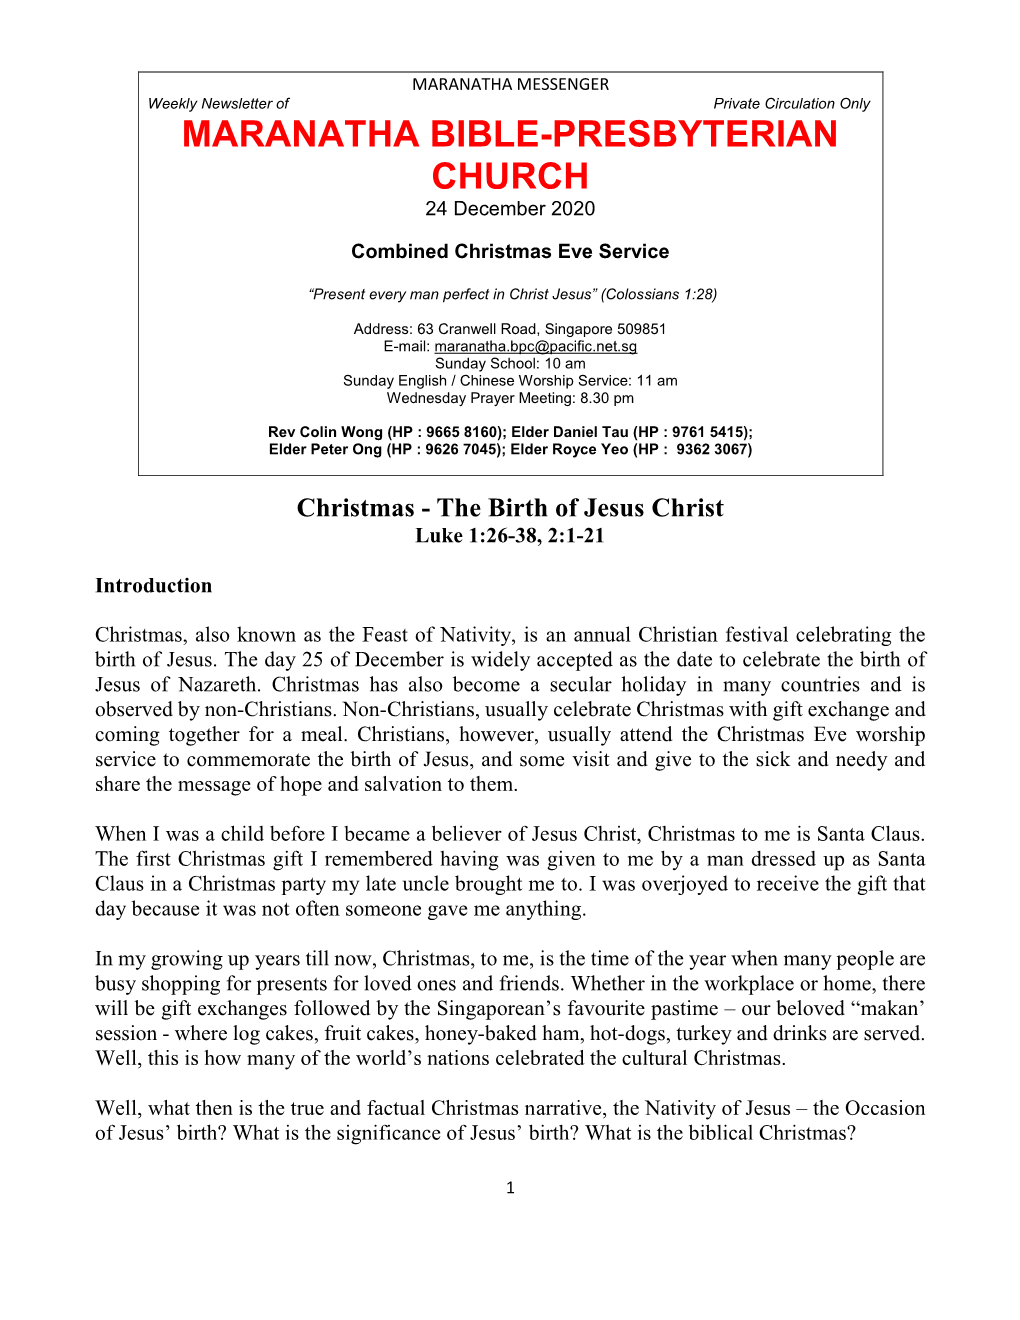 The Birth of Jesus Christ Luke 1:26-38, 2:1-21